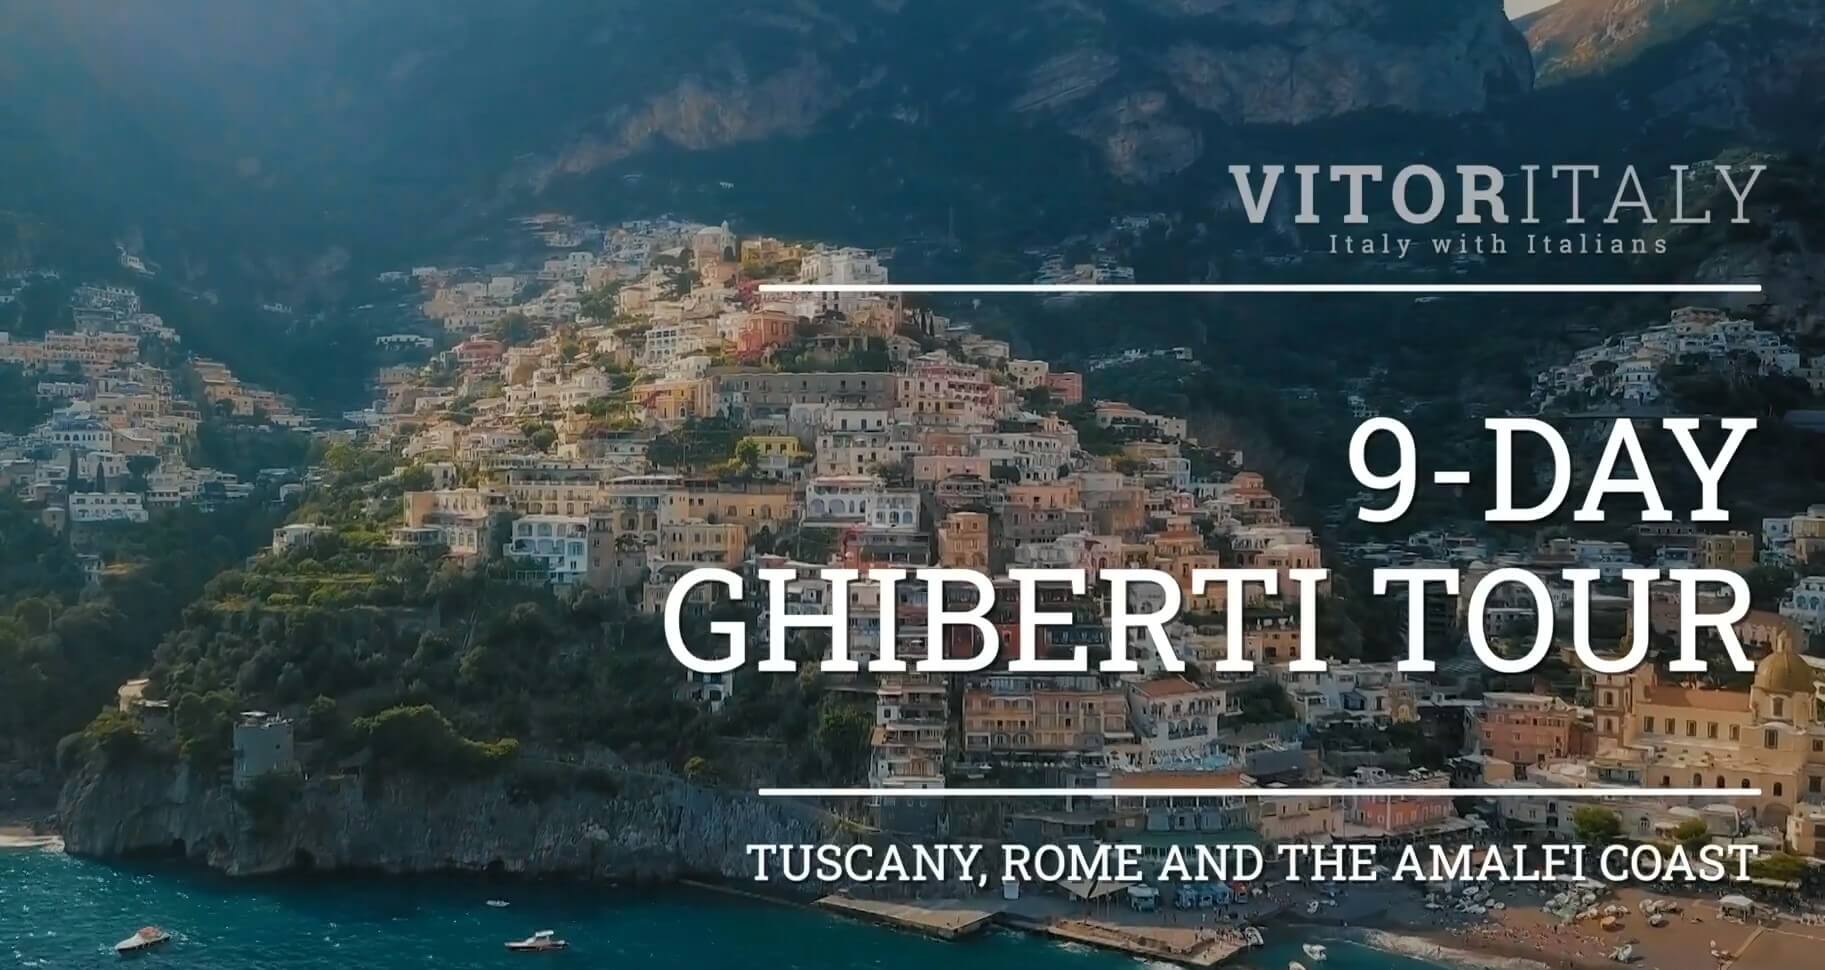 GHIBERTI TOUR - Tuscany, Rome and the Amalfi Coast in 9 days